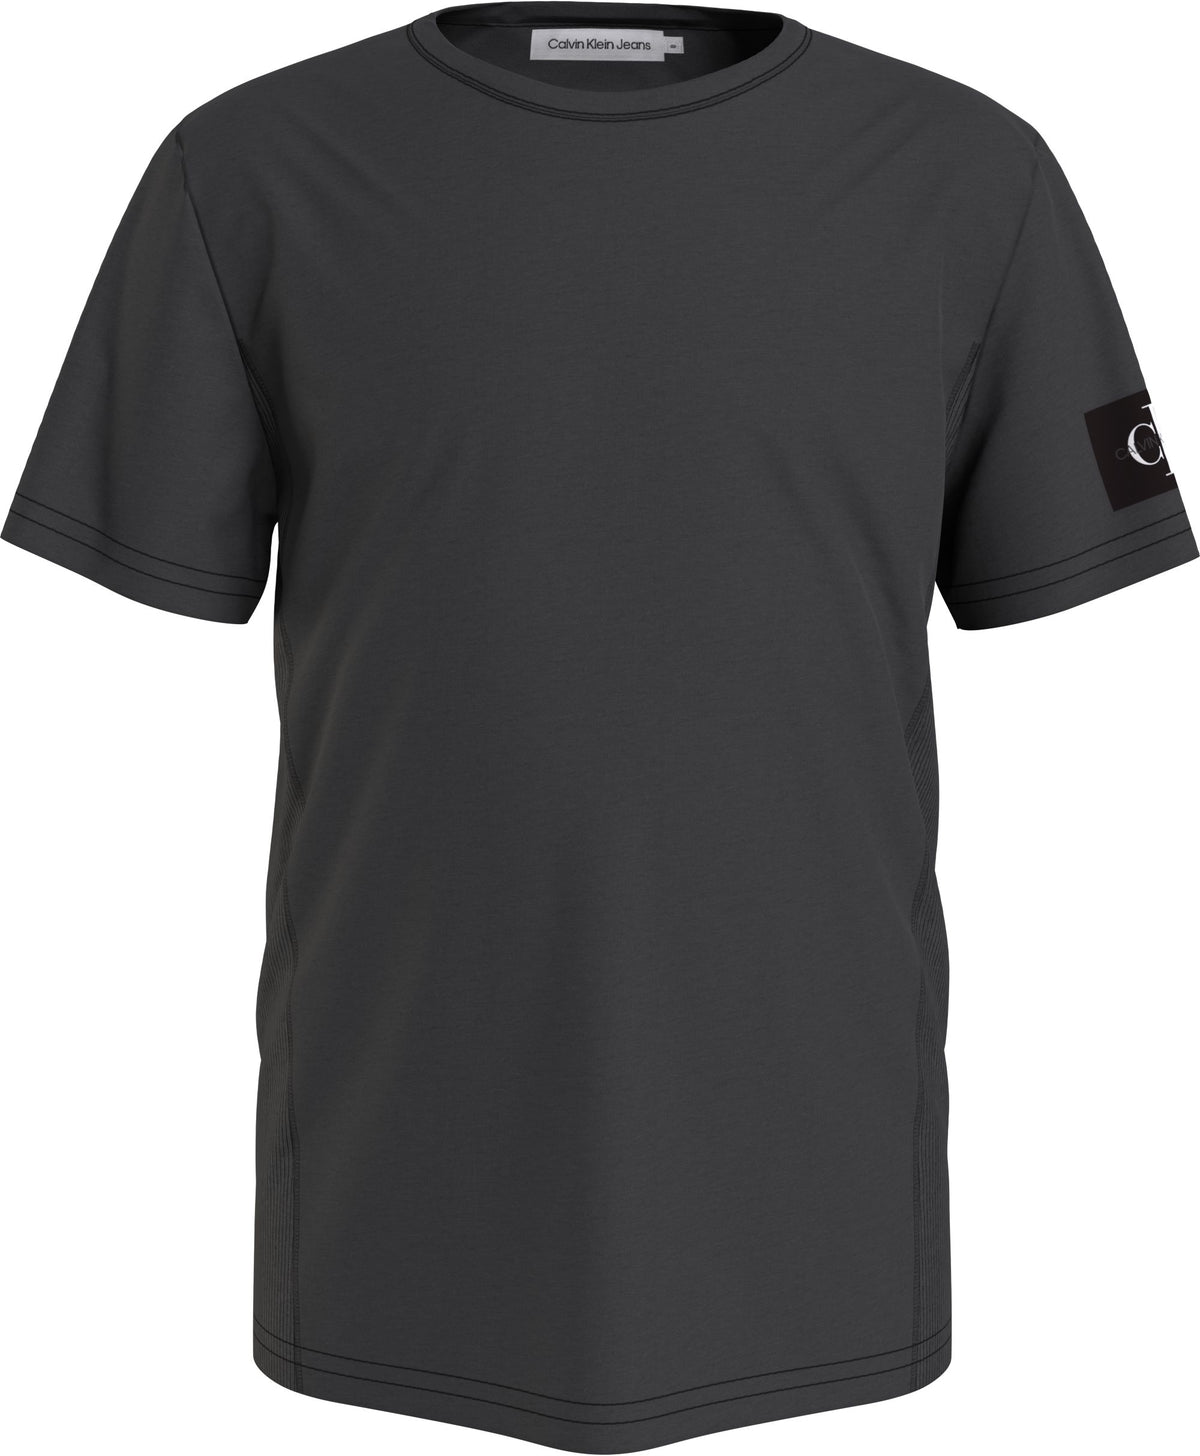 Ck T-Shirt Fitted – Jungen Badge Top Black Rib HappyKidsShop IB0IB01113